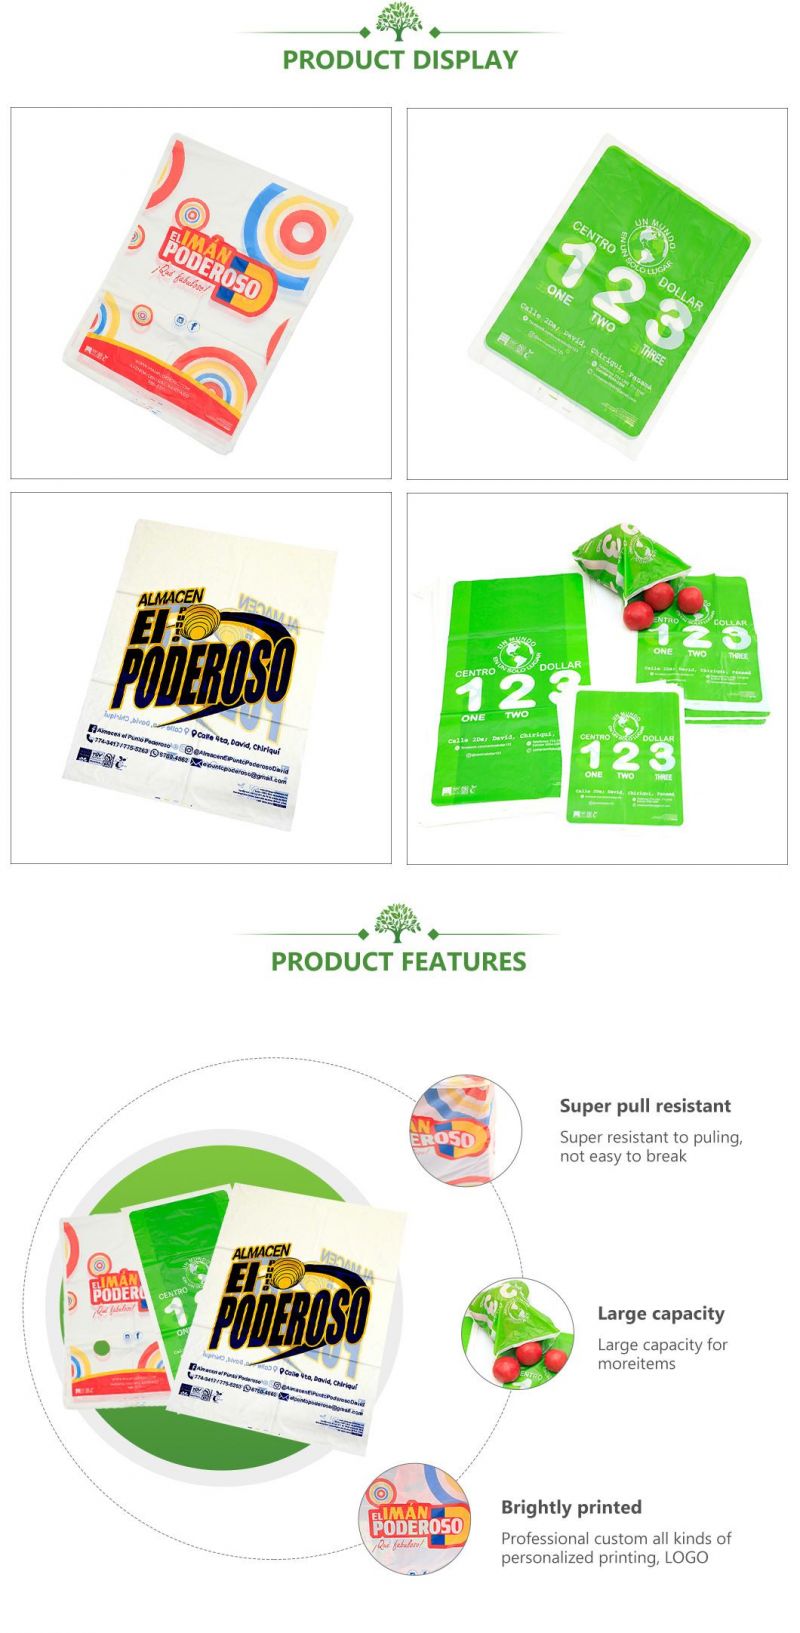 Cornstarch Based Designer 100% Biodegradabe Heavy Duty Vegetable Supermarket Bags